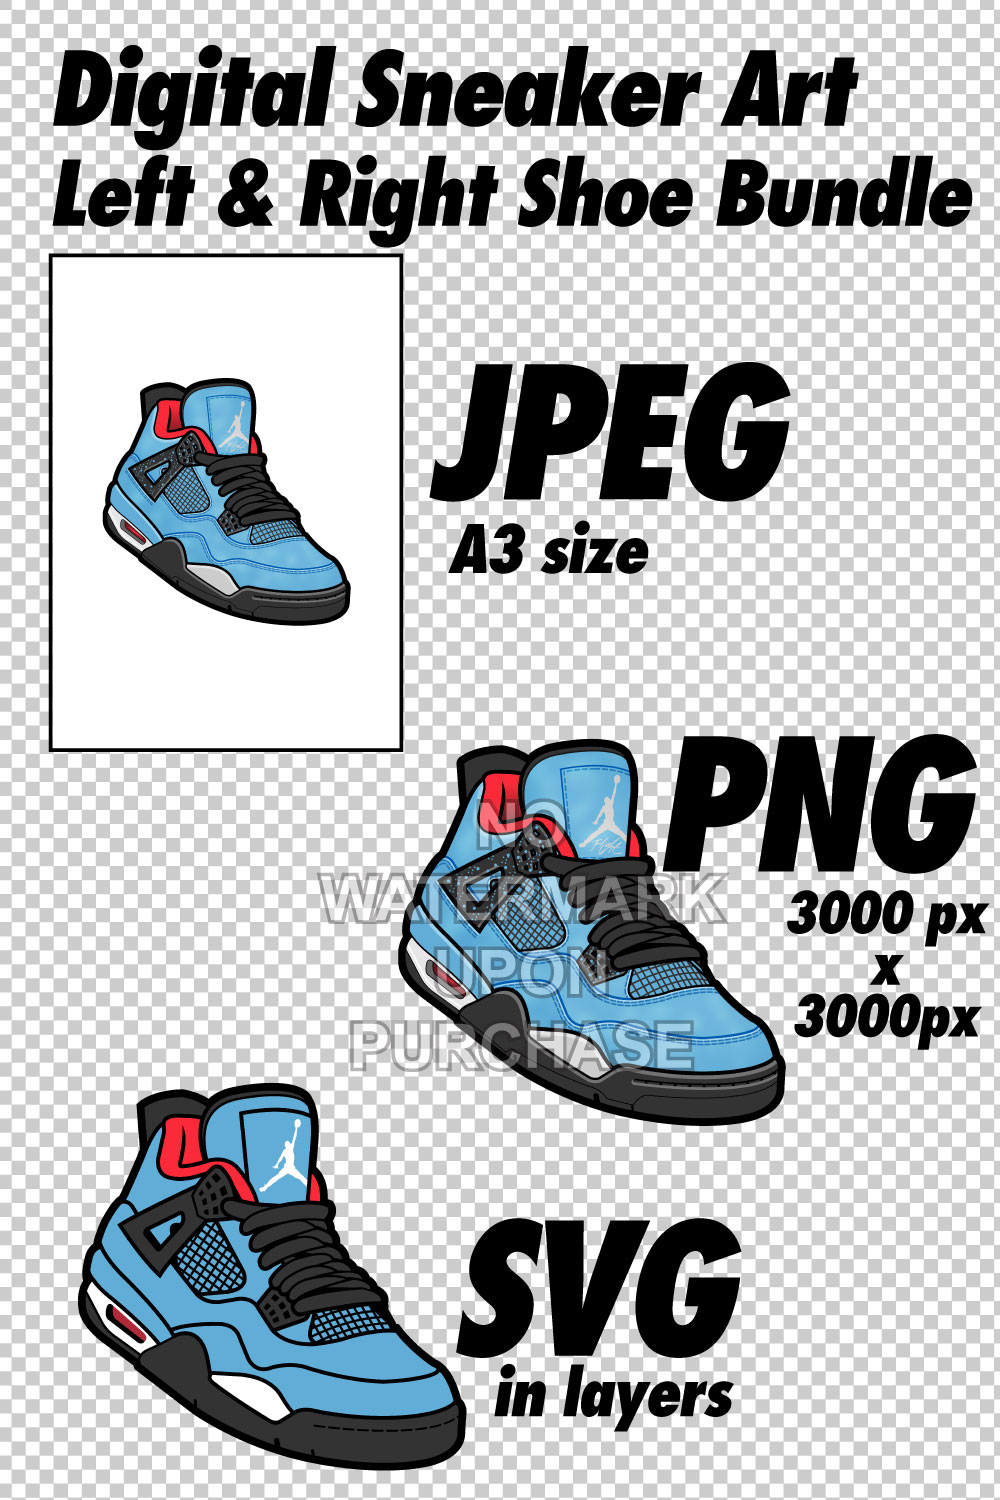 Air Jordan 4 Travis Scott JPEG PNG SVG Sneaker Art Right & Left Shoe Bundle pinterest preview image.